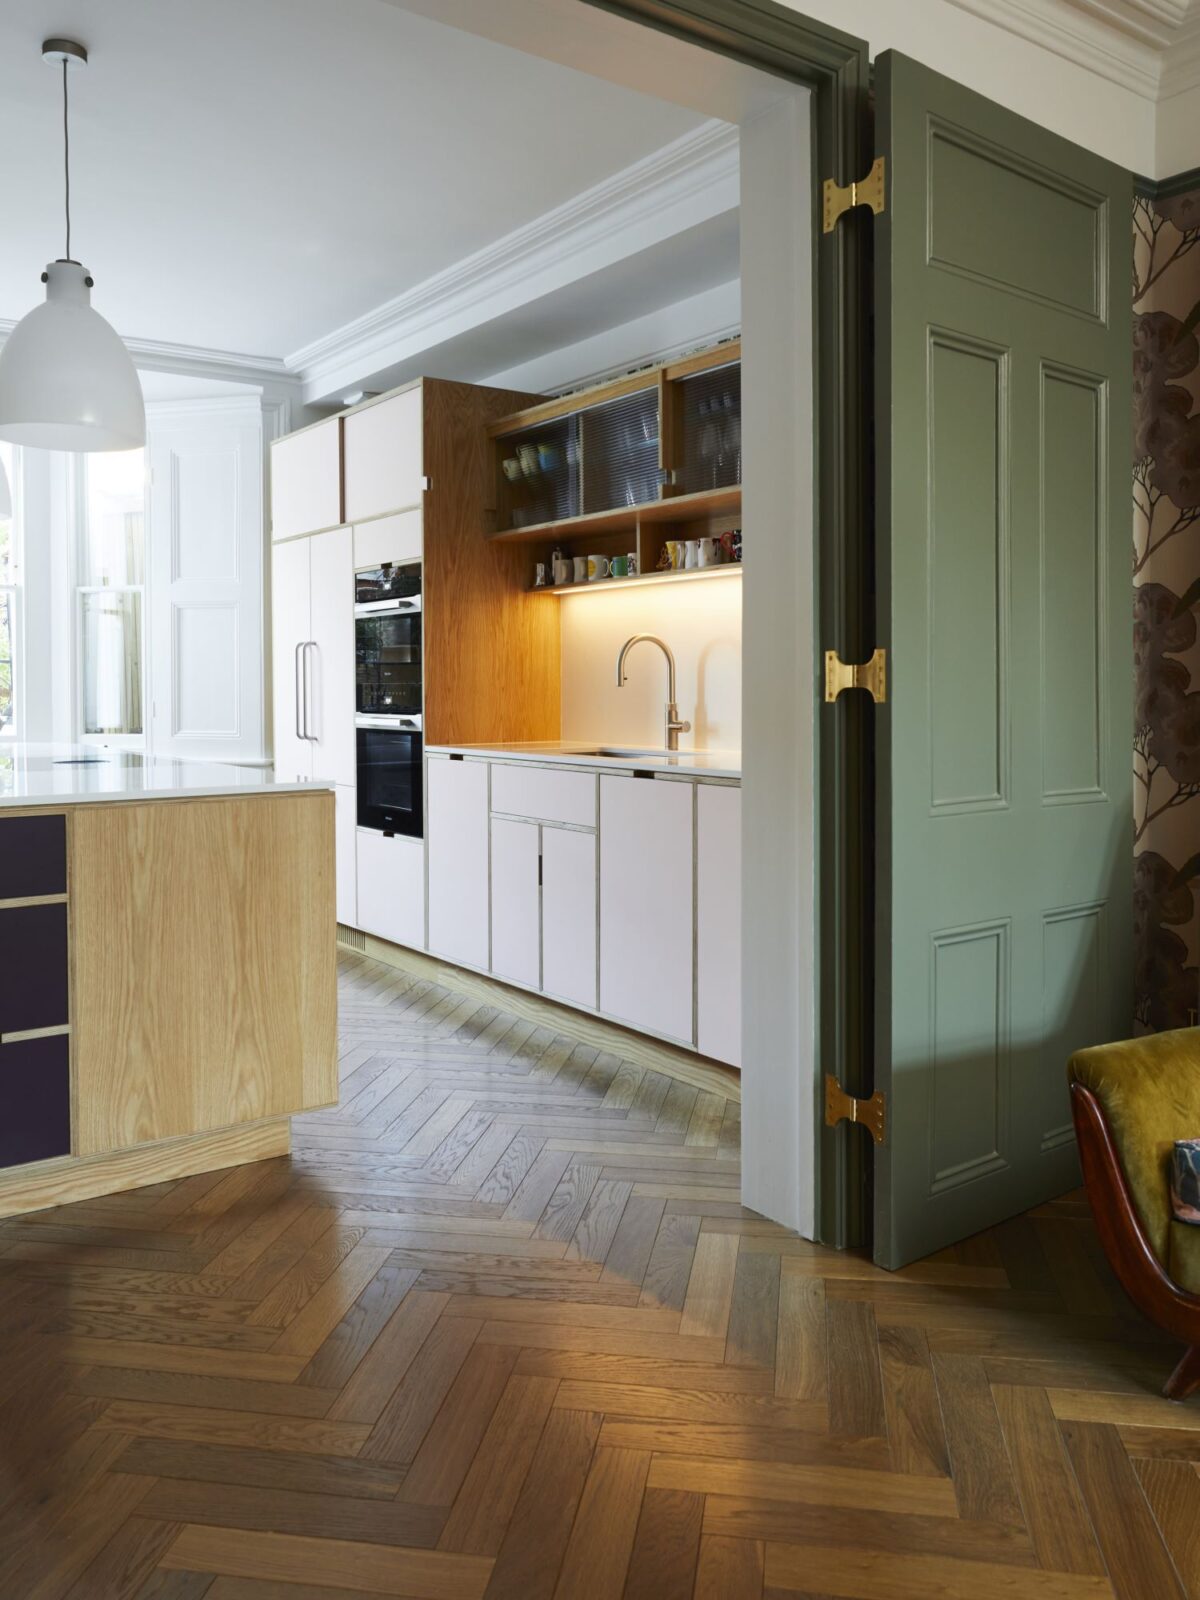 dalton herringbone flooring in kitchen